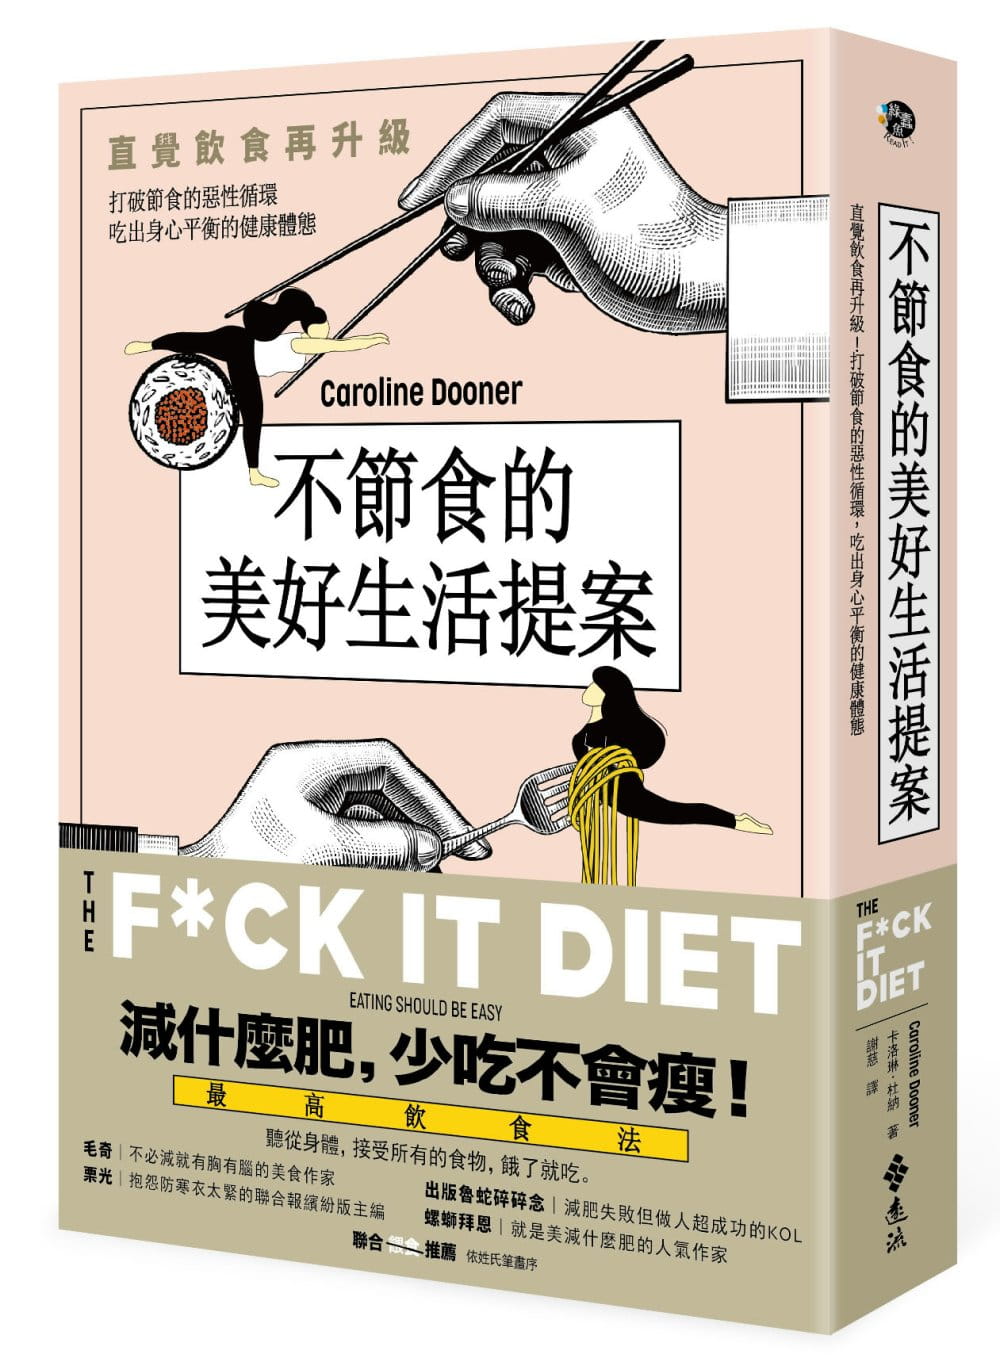 Mentinere Dieta Rina | PDF